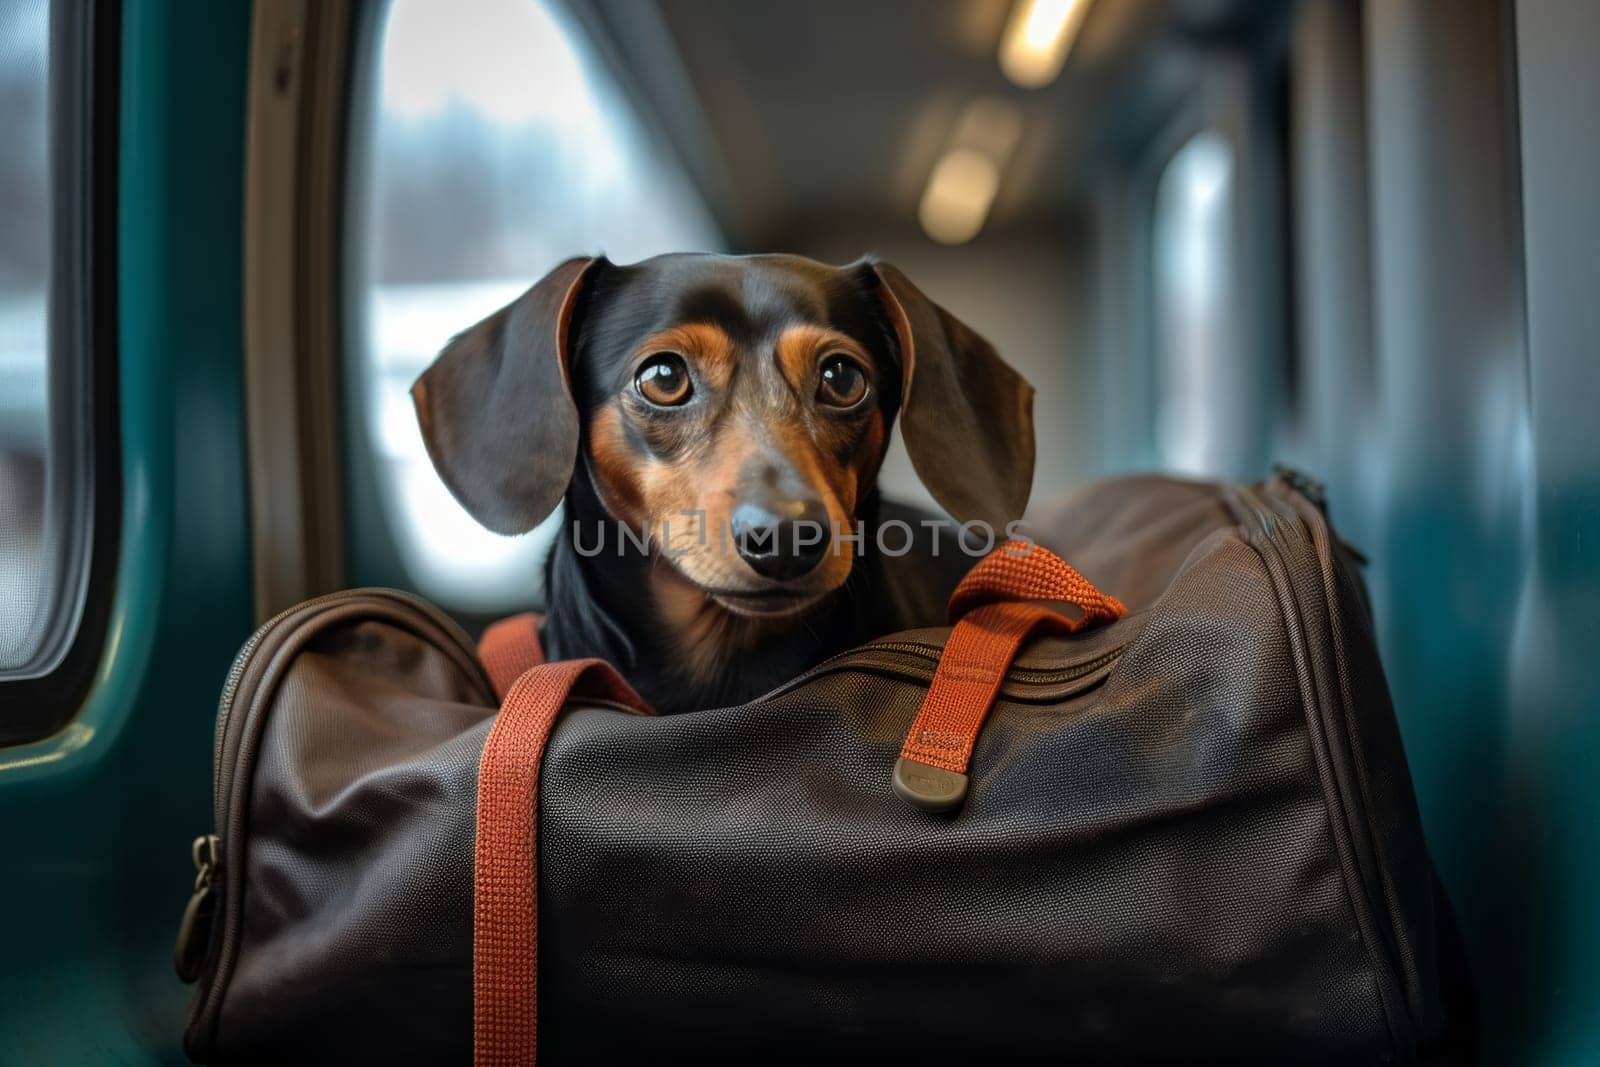 Dog Peeking from Travel Bag by andreyz